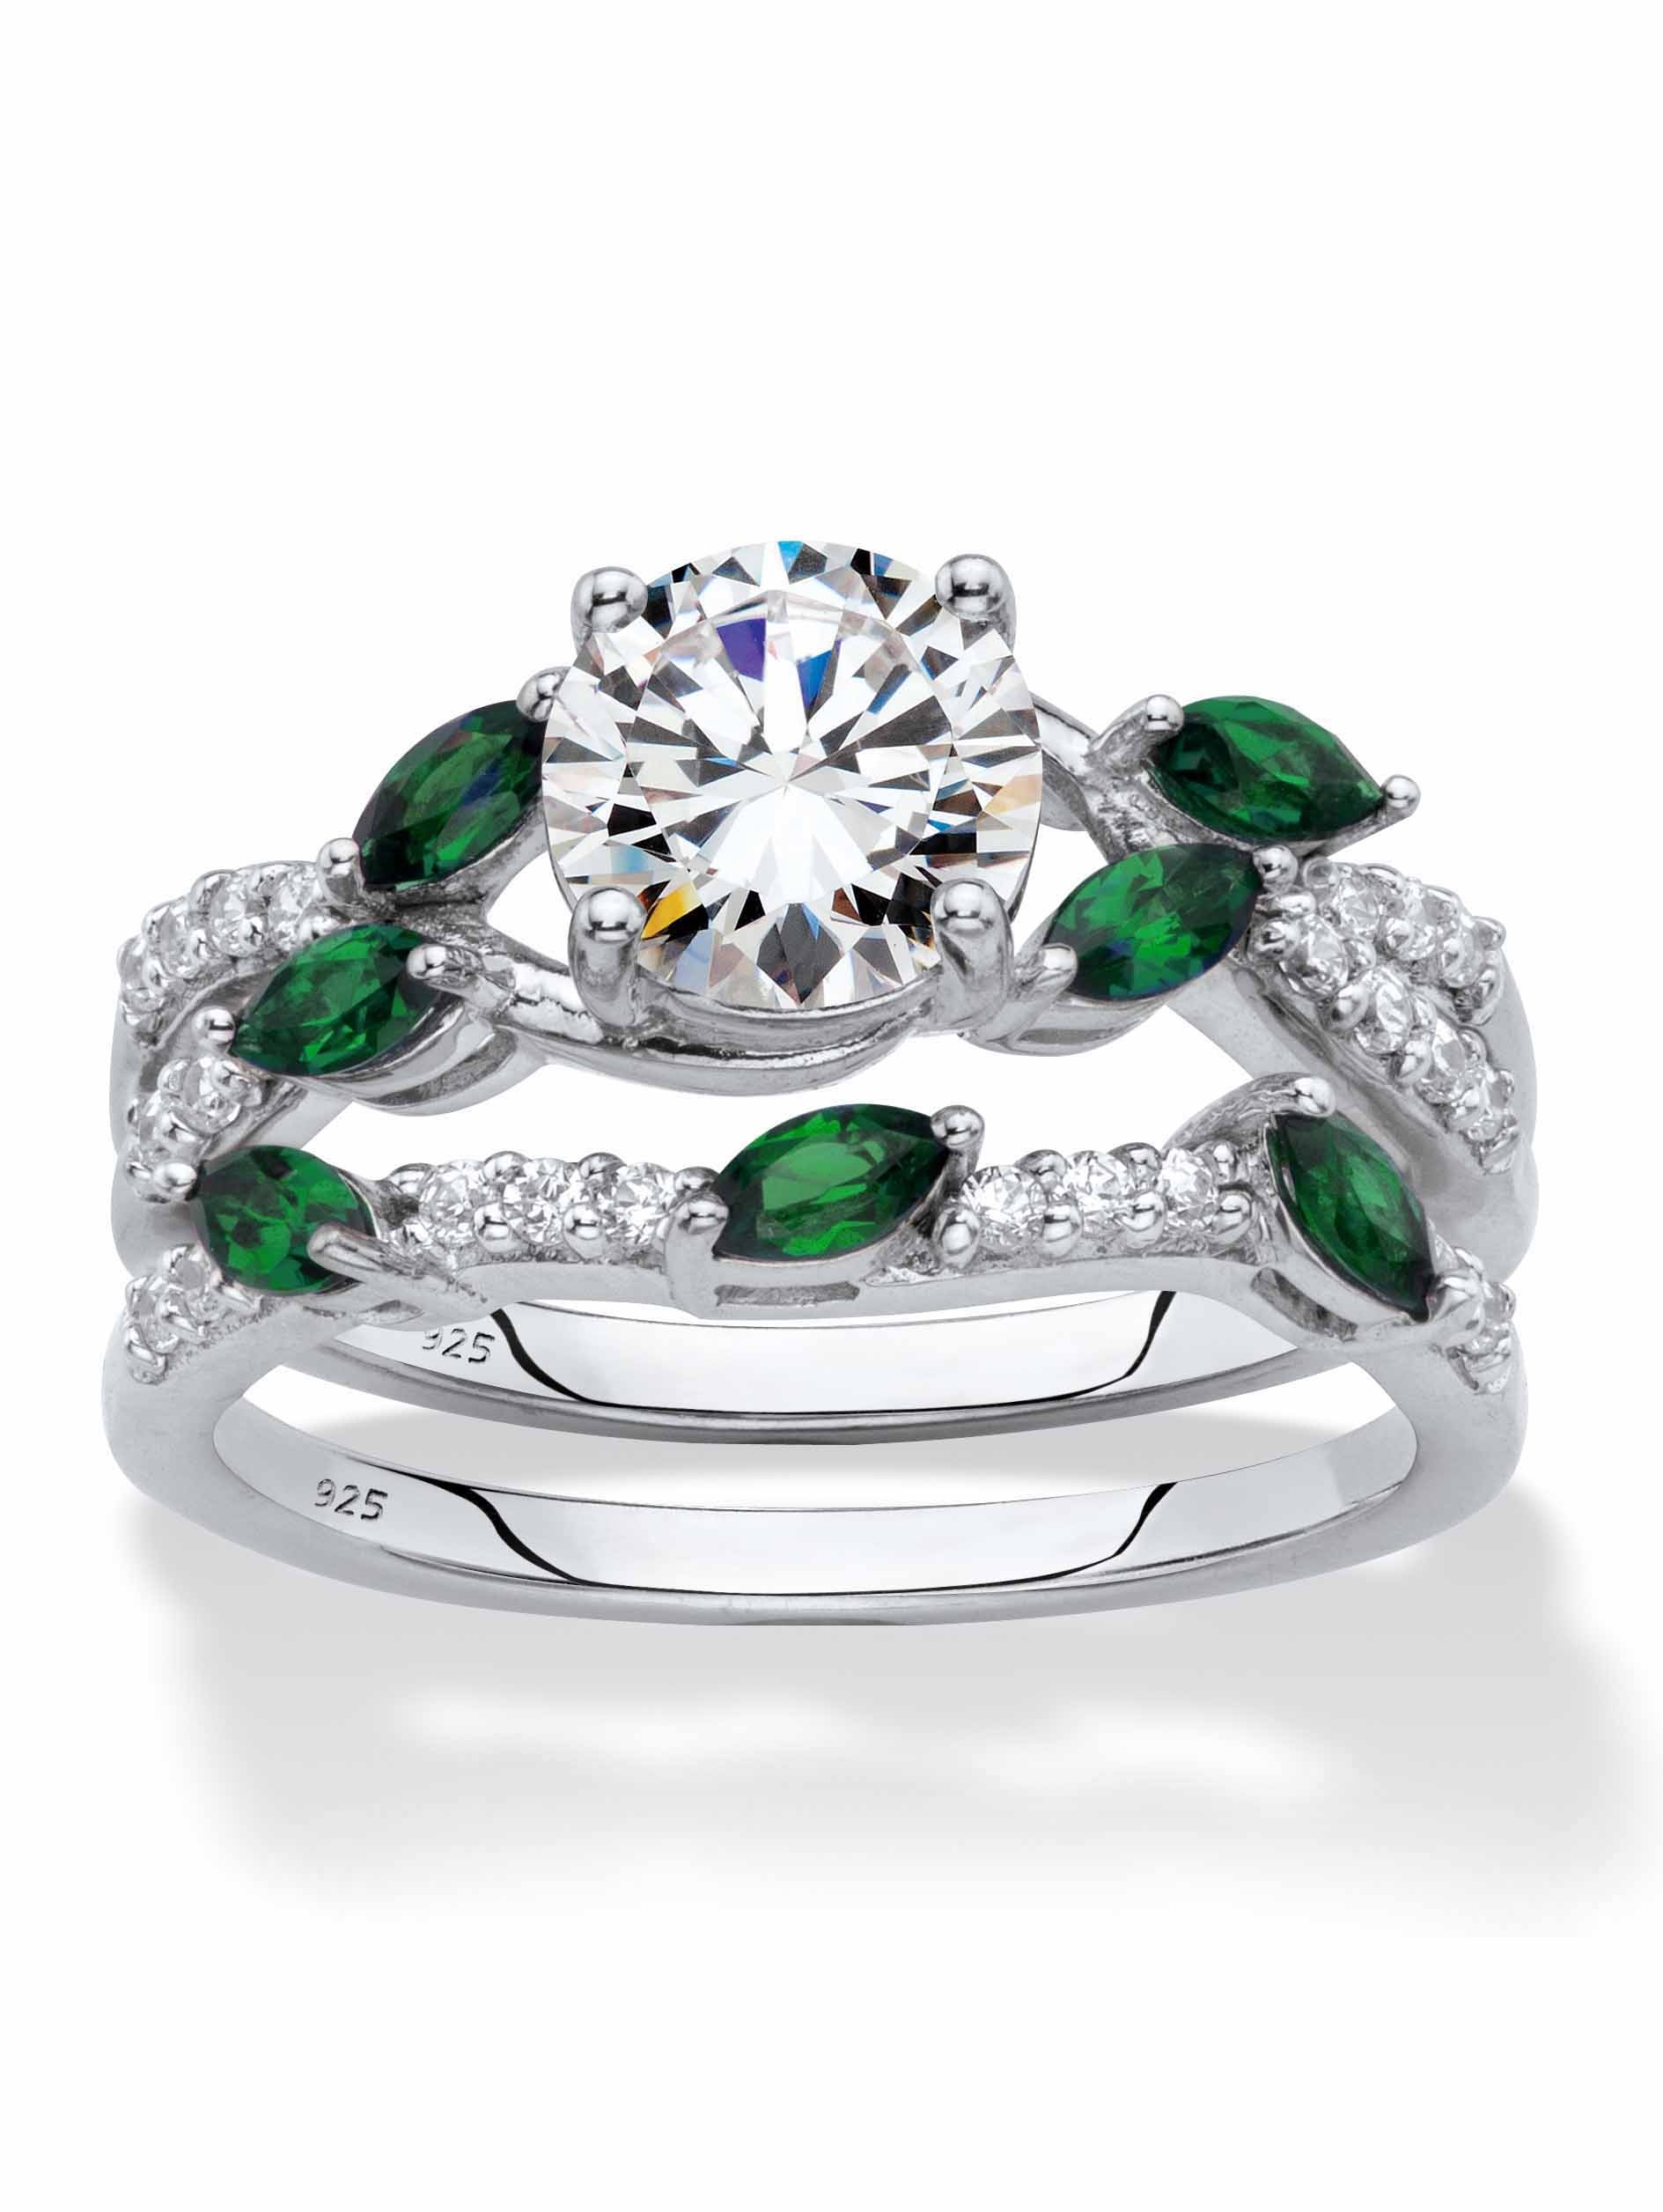 Emerald, Cubic Zirconia, Created Emerald, Wedding Ring Set, 1890x2520 HD Handy